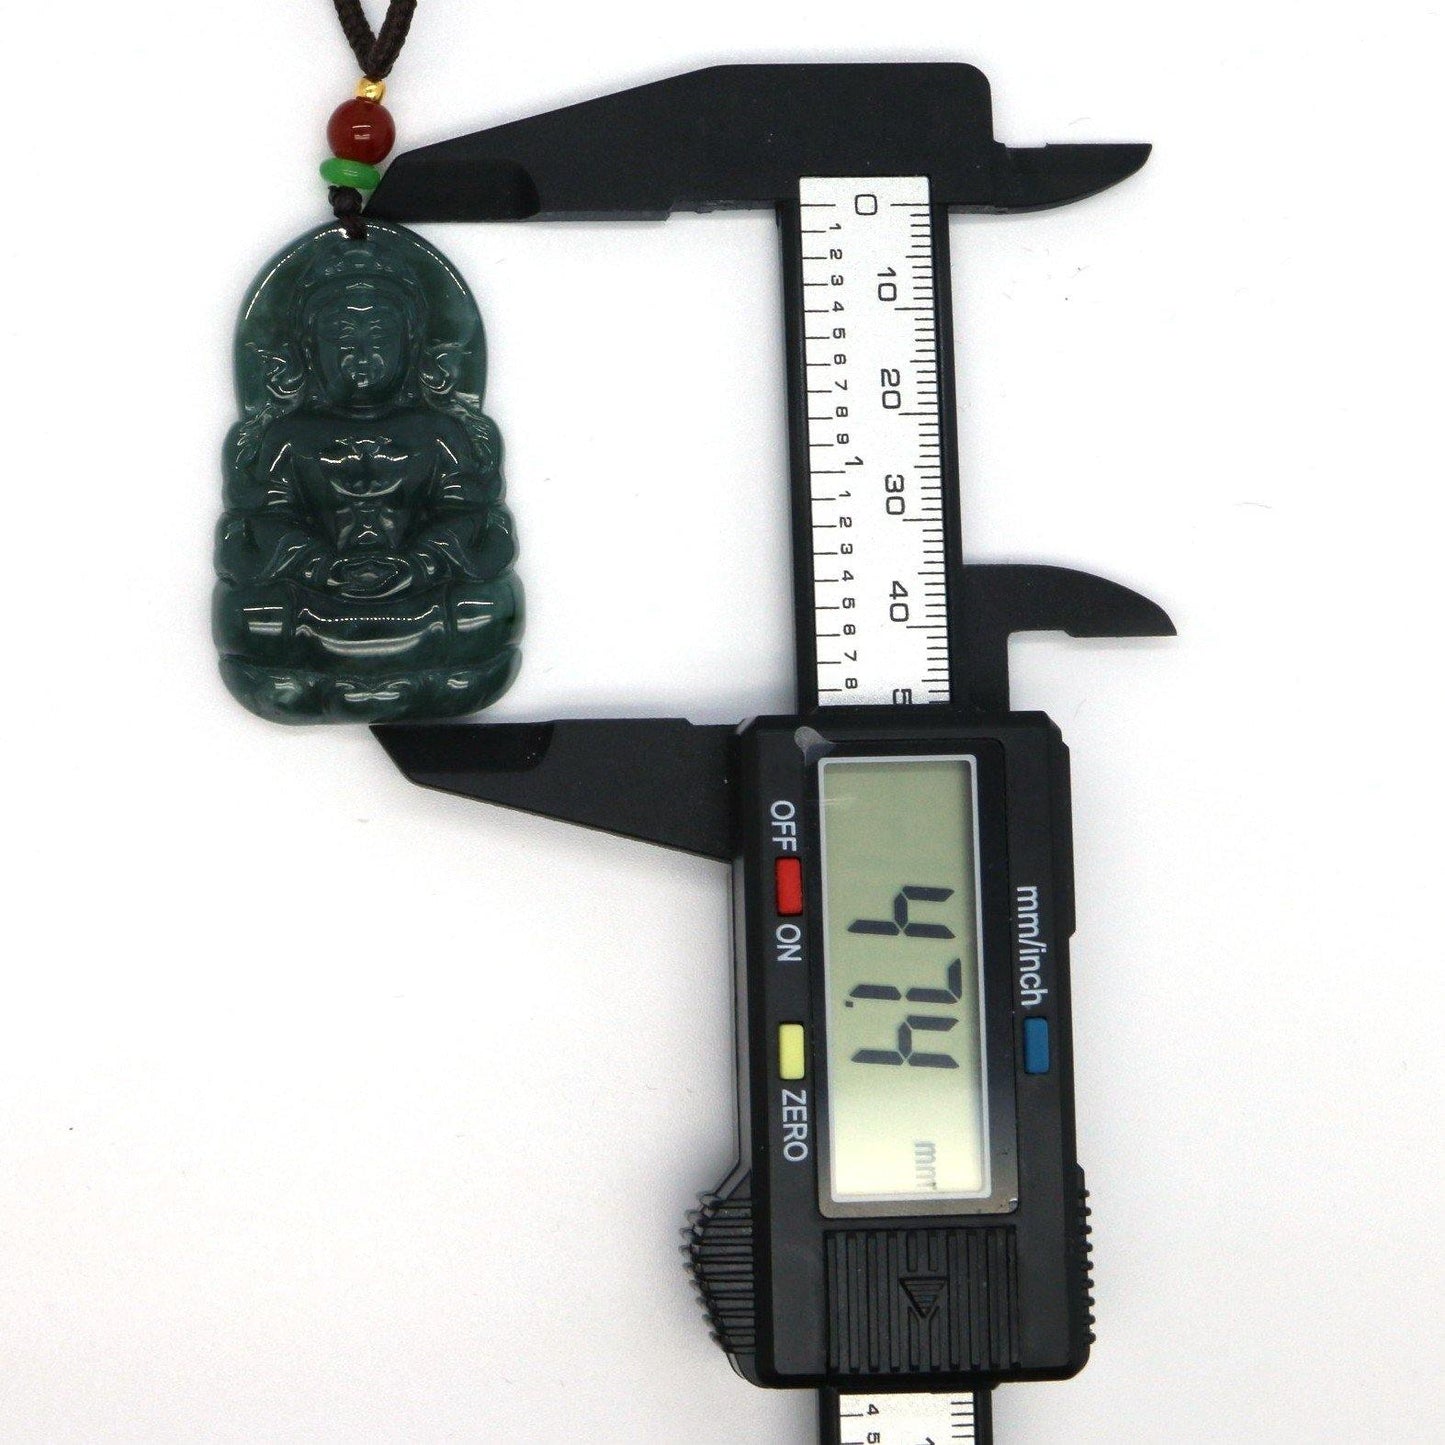 A Grade Jadeite Jade Guanyin Pendants Item no GY0025 - Jade-collector.com